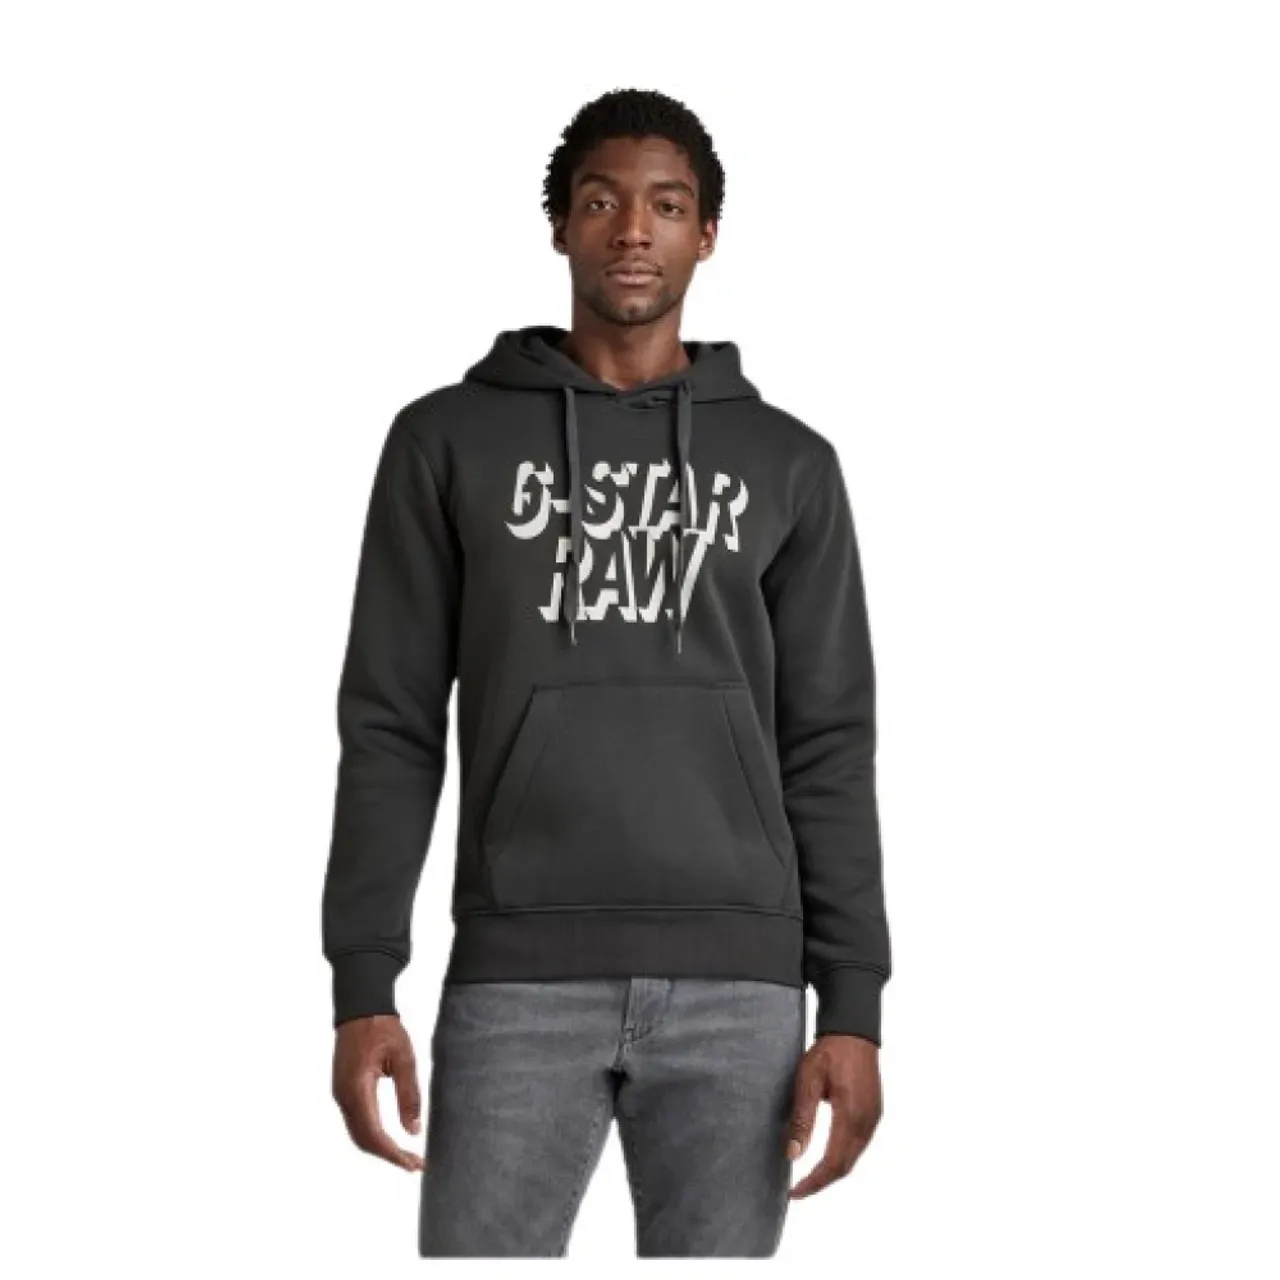 G-star - Sweatshirts & Hoodies 